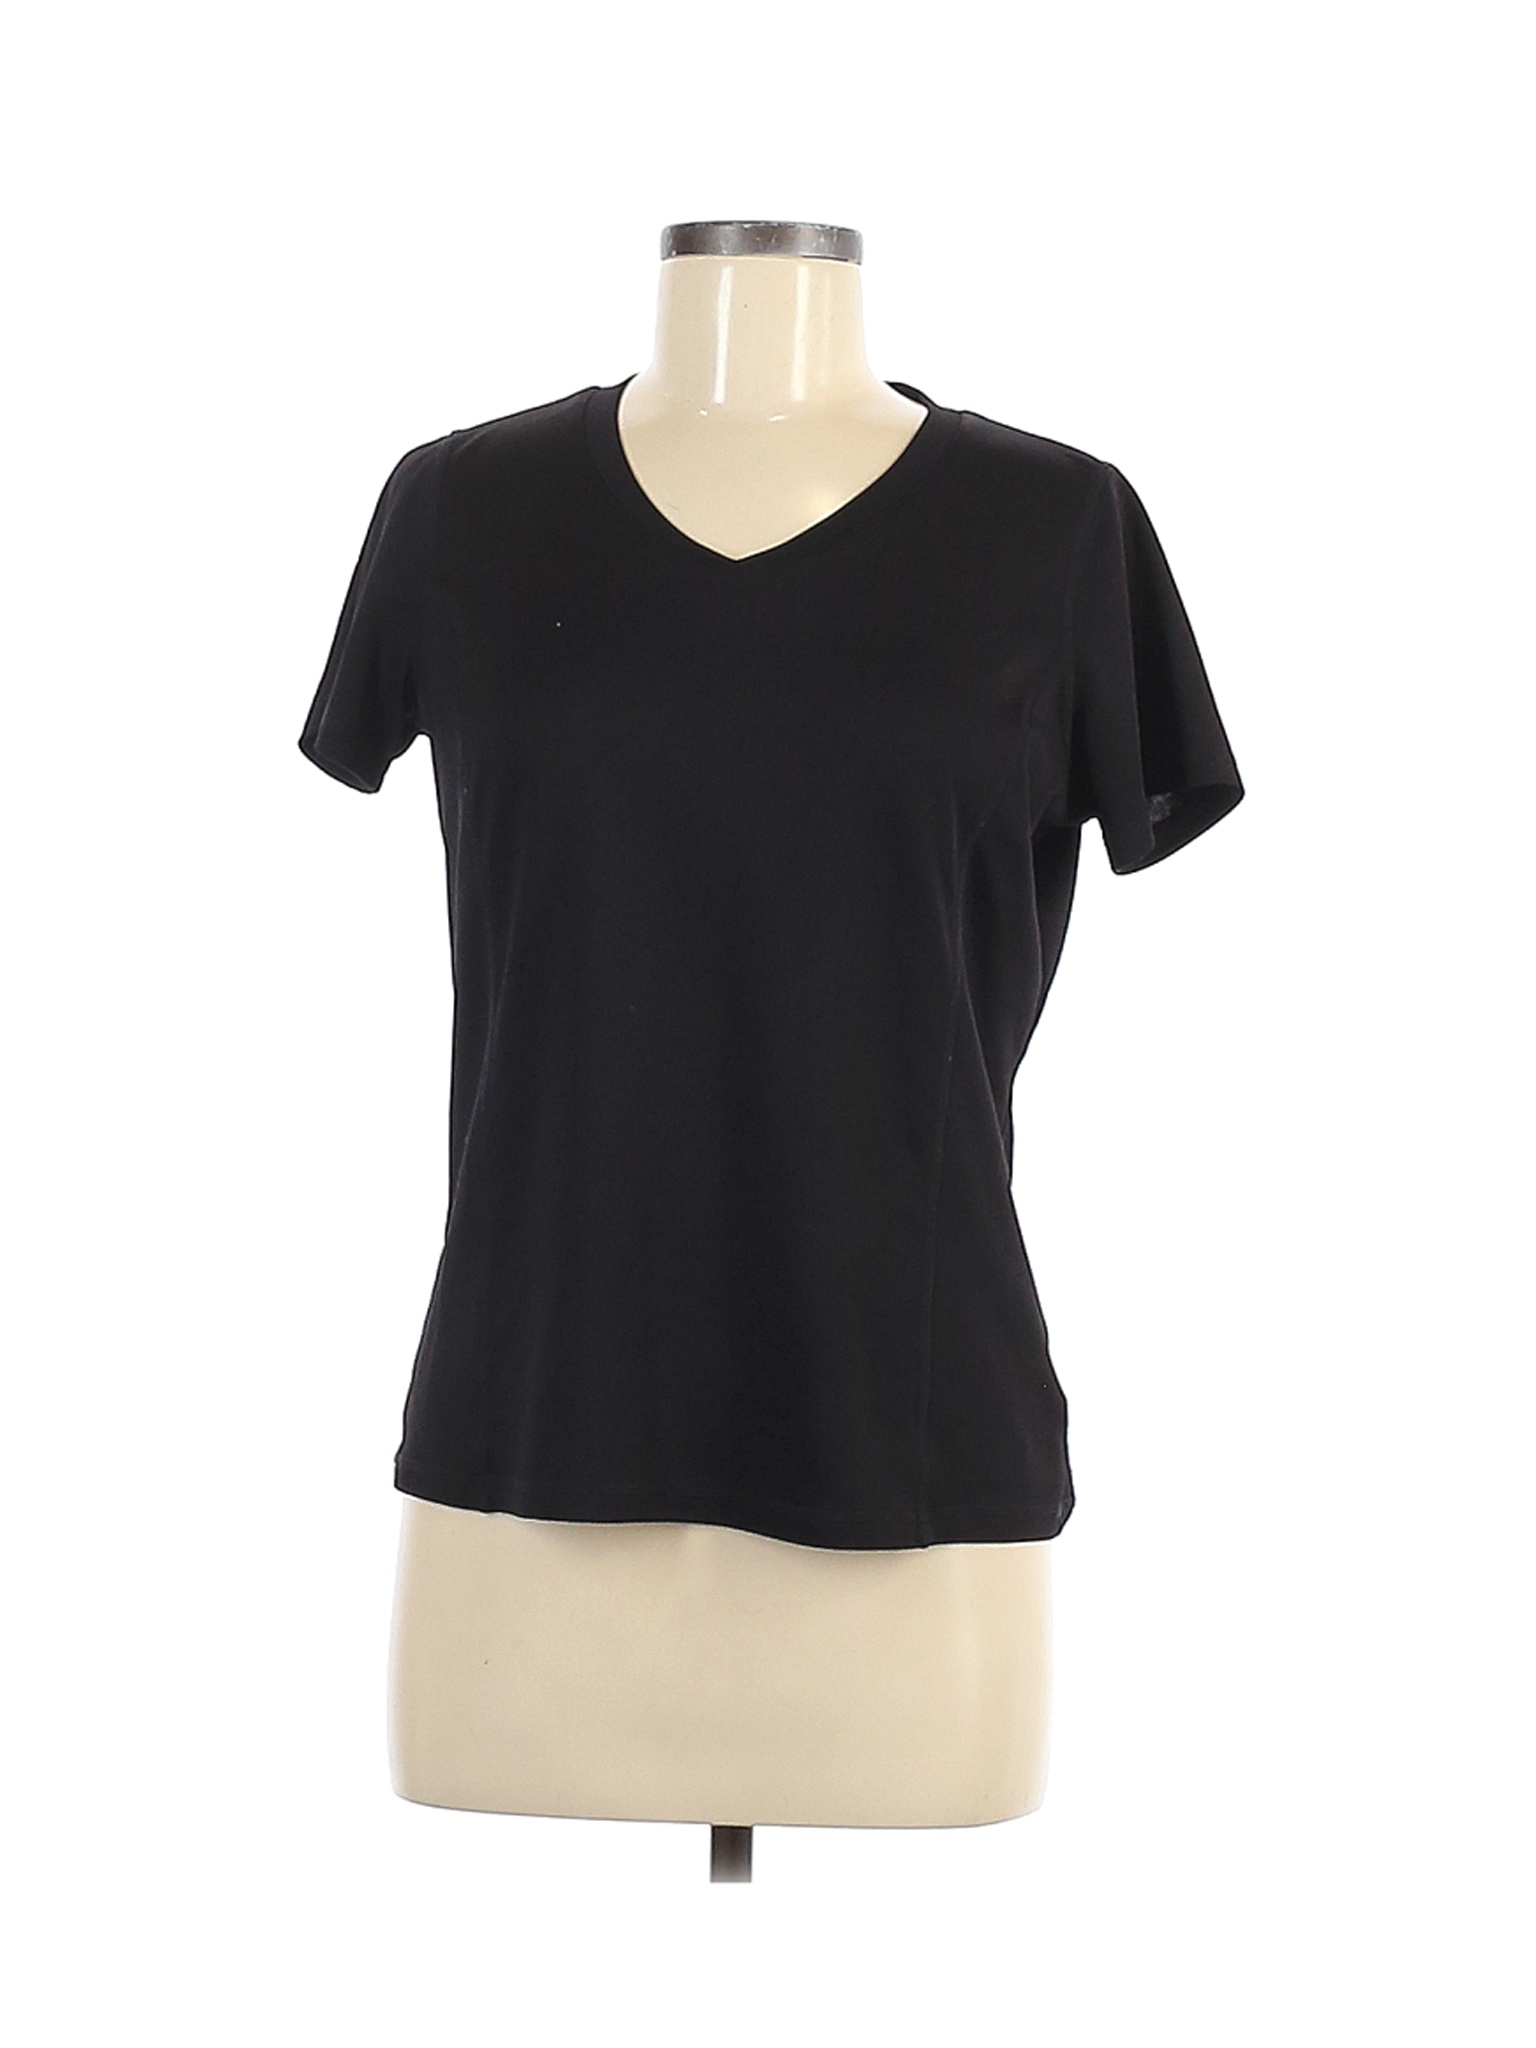 Made for Life Women Black Active T-Shirt M | eBay